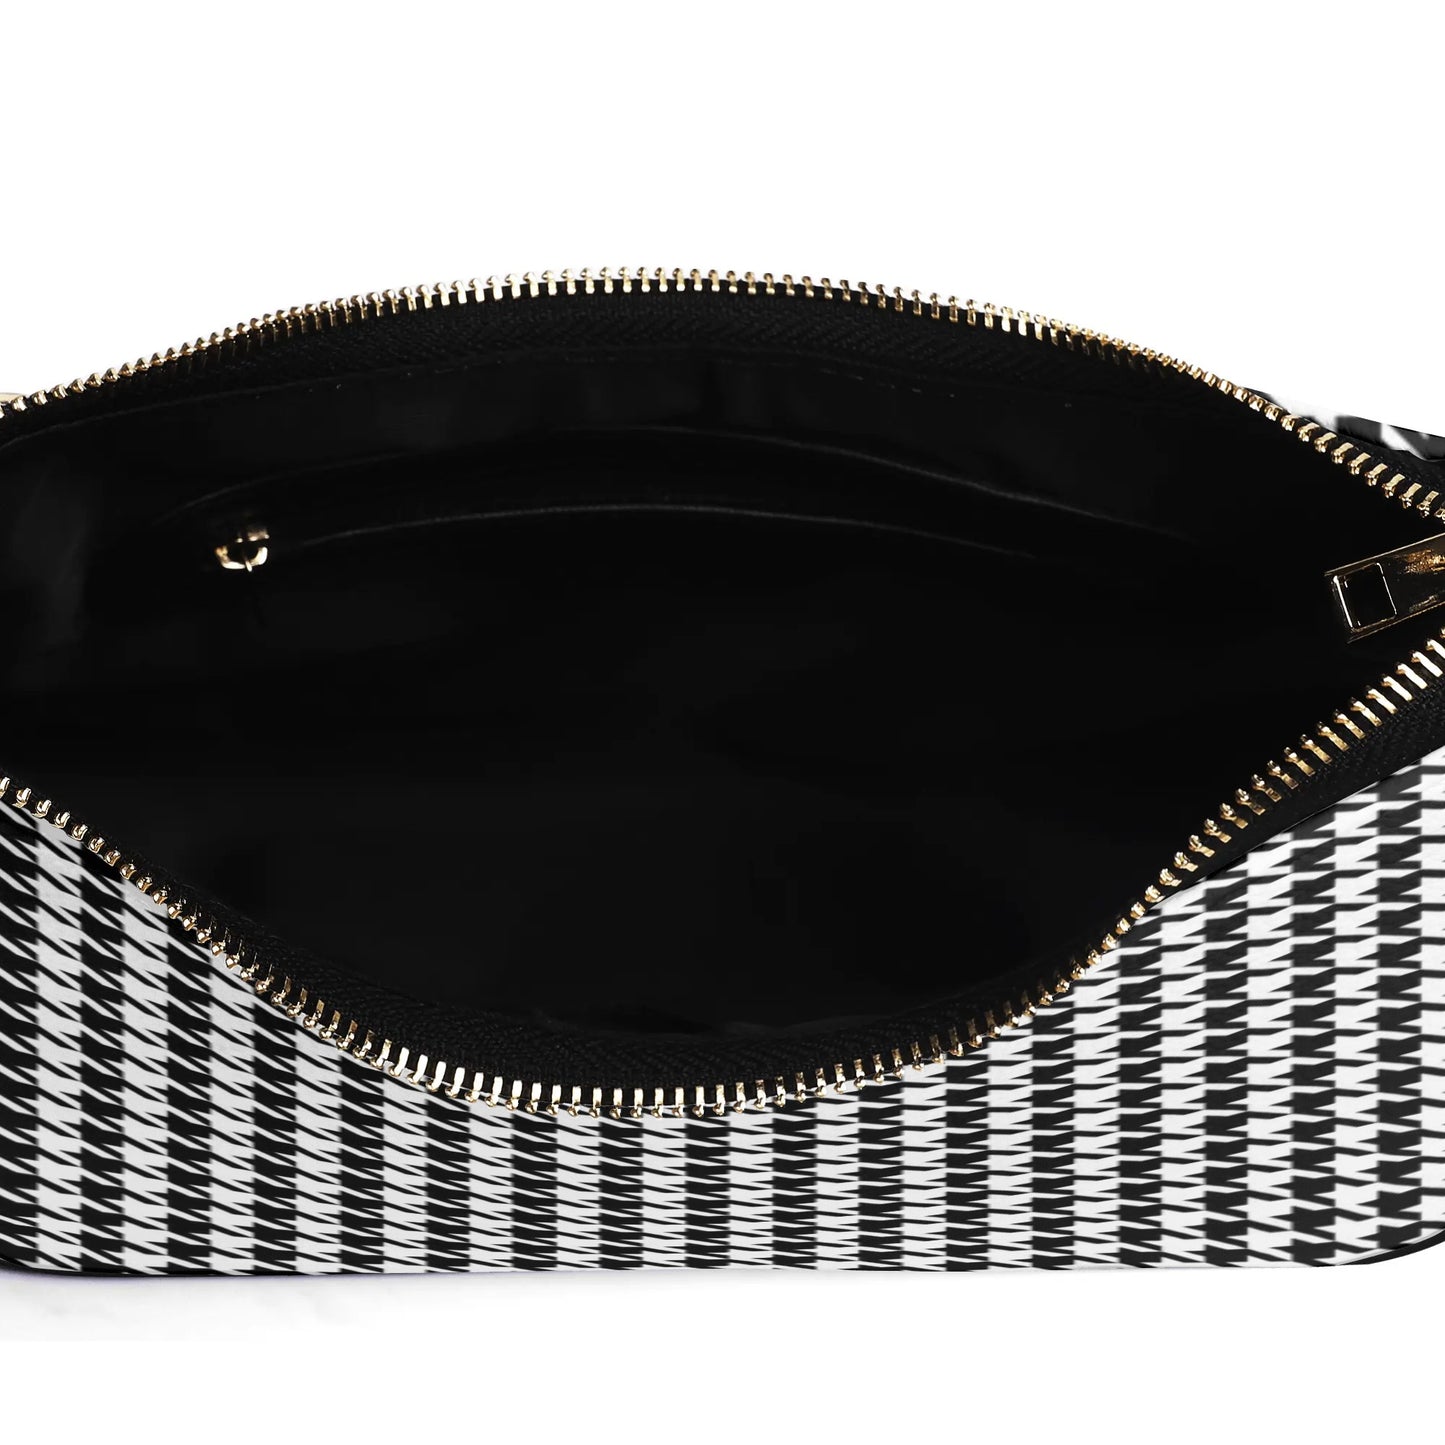 Black Houndstooth Handbag, 60s inspired Houndstooth Purse, Black and White PU Leather Handbag, 60s purse style, Retro Handbag, Retro Purse